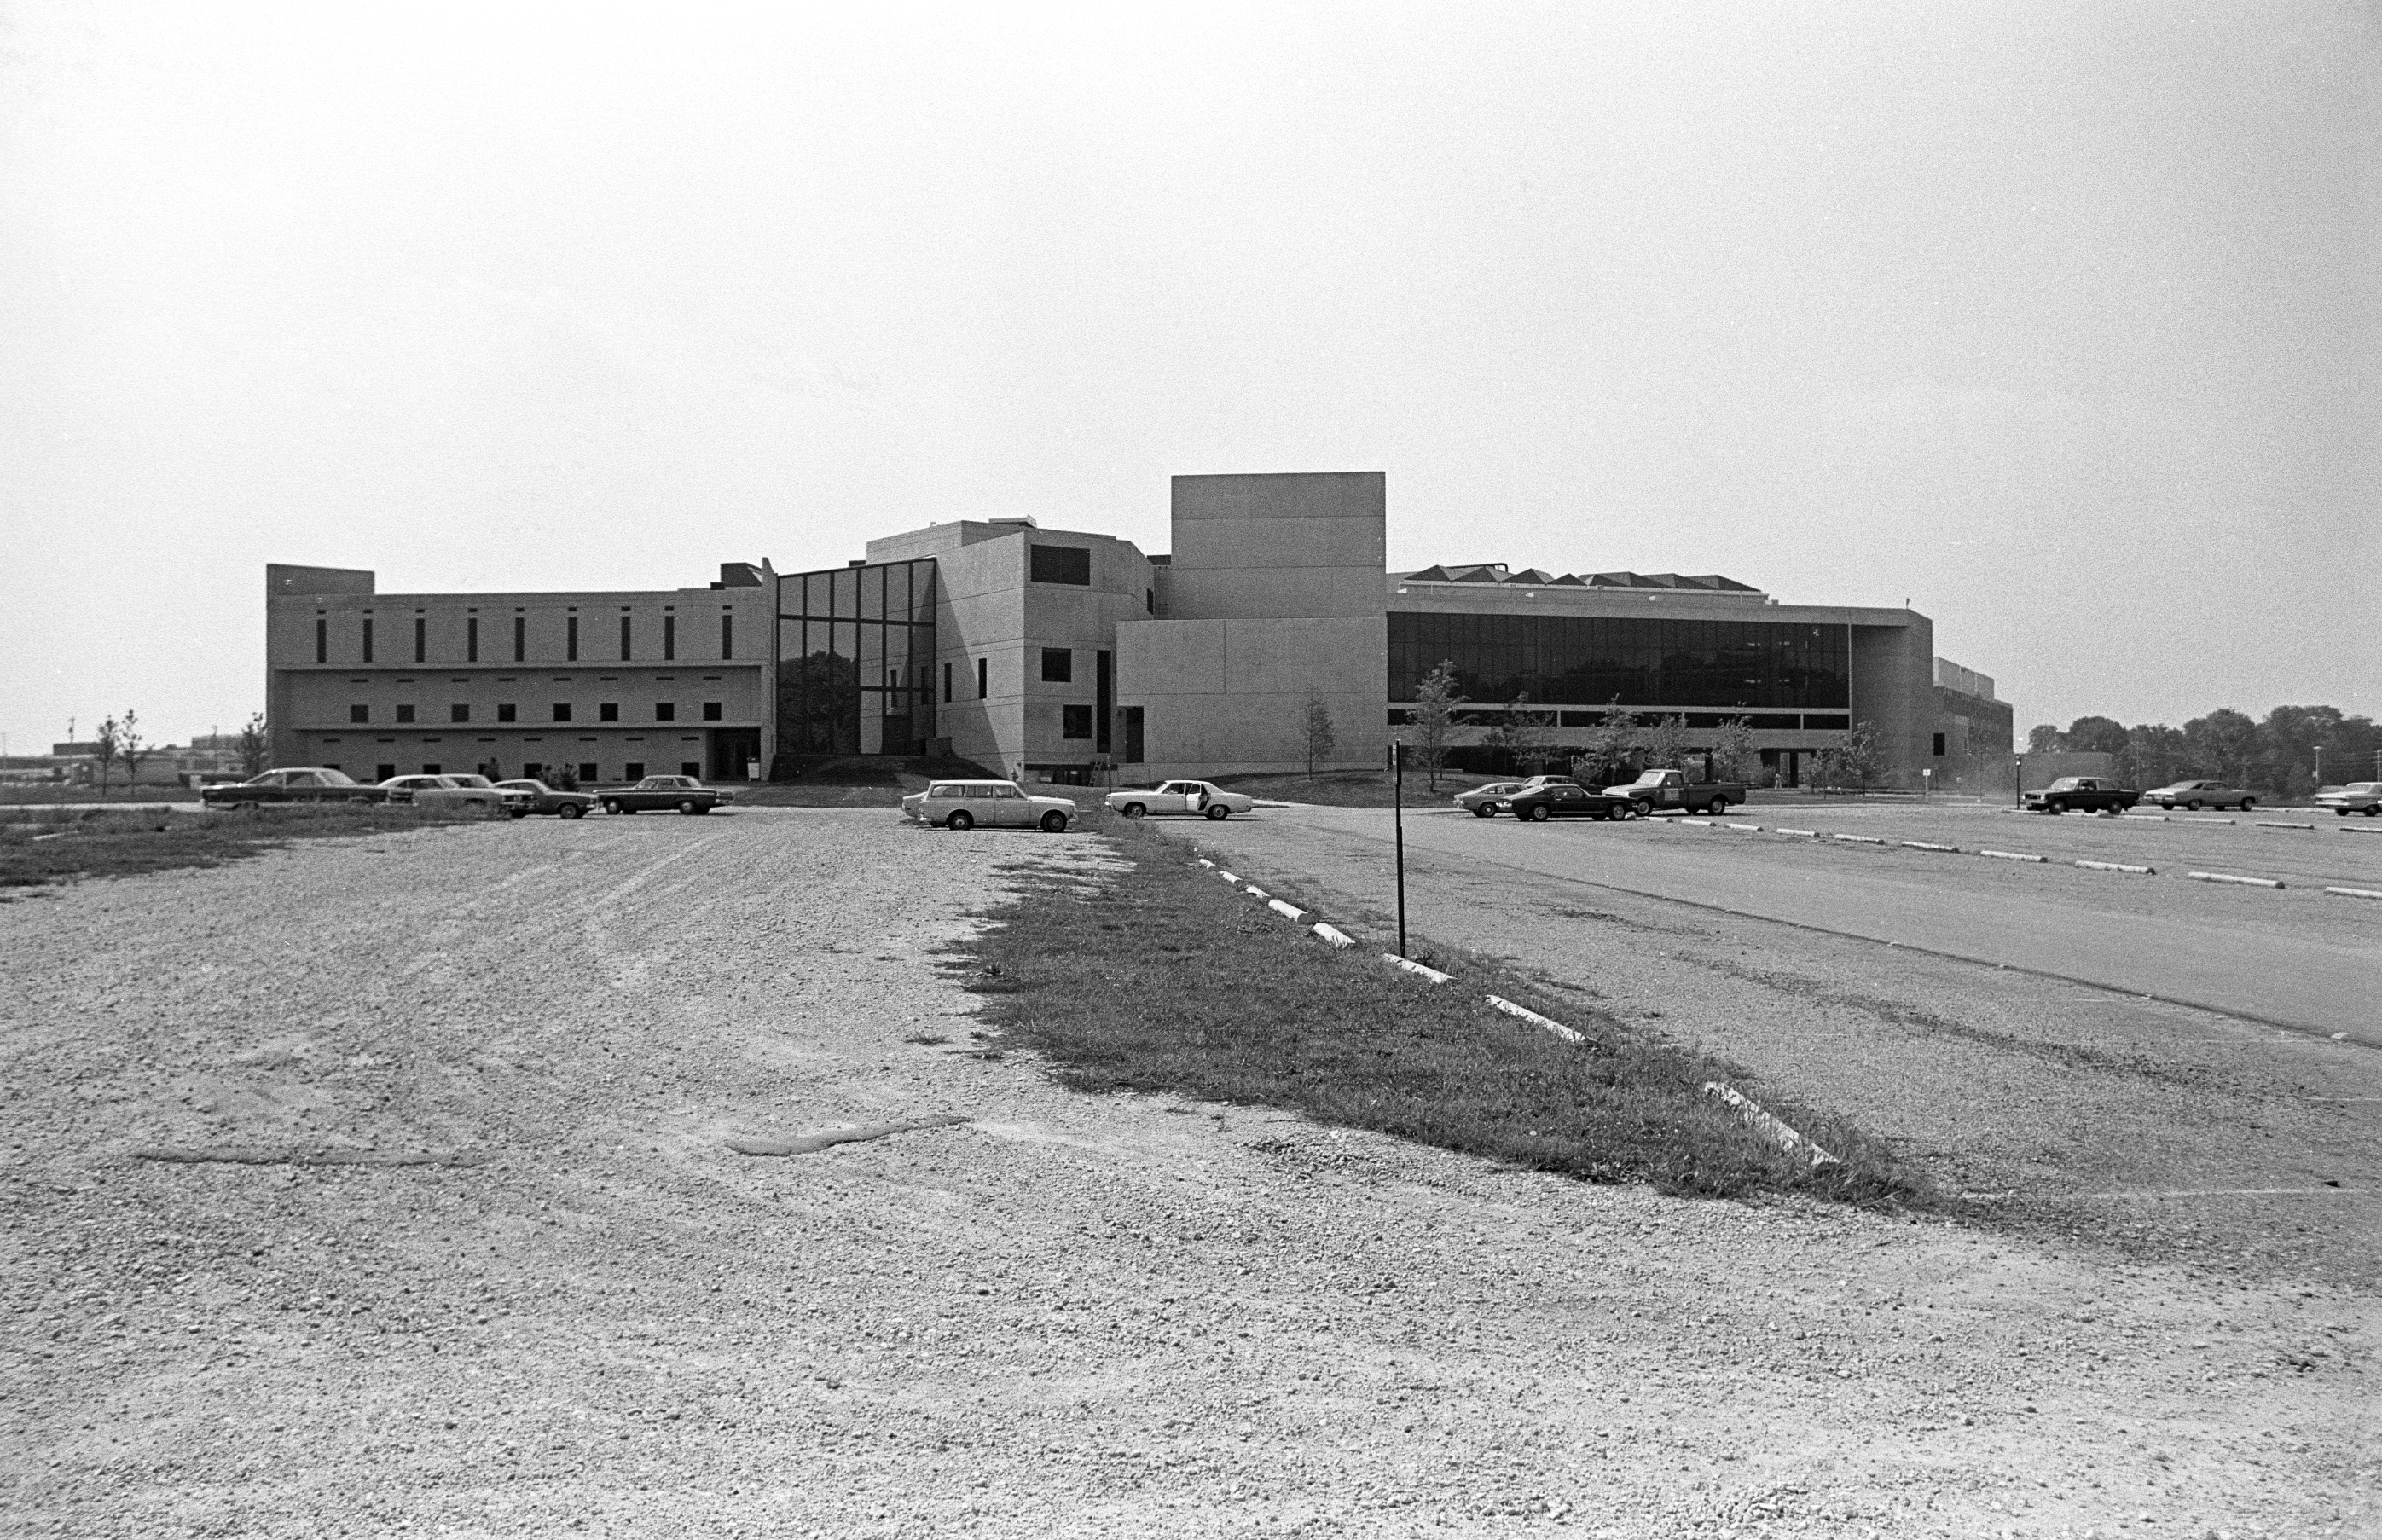 Creative Arts Center & University Library, 1974 (7408-26-8 19a)